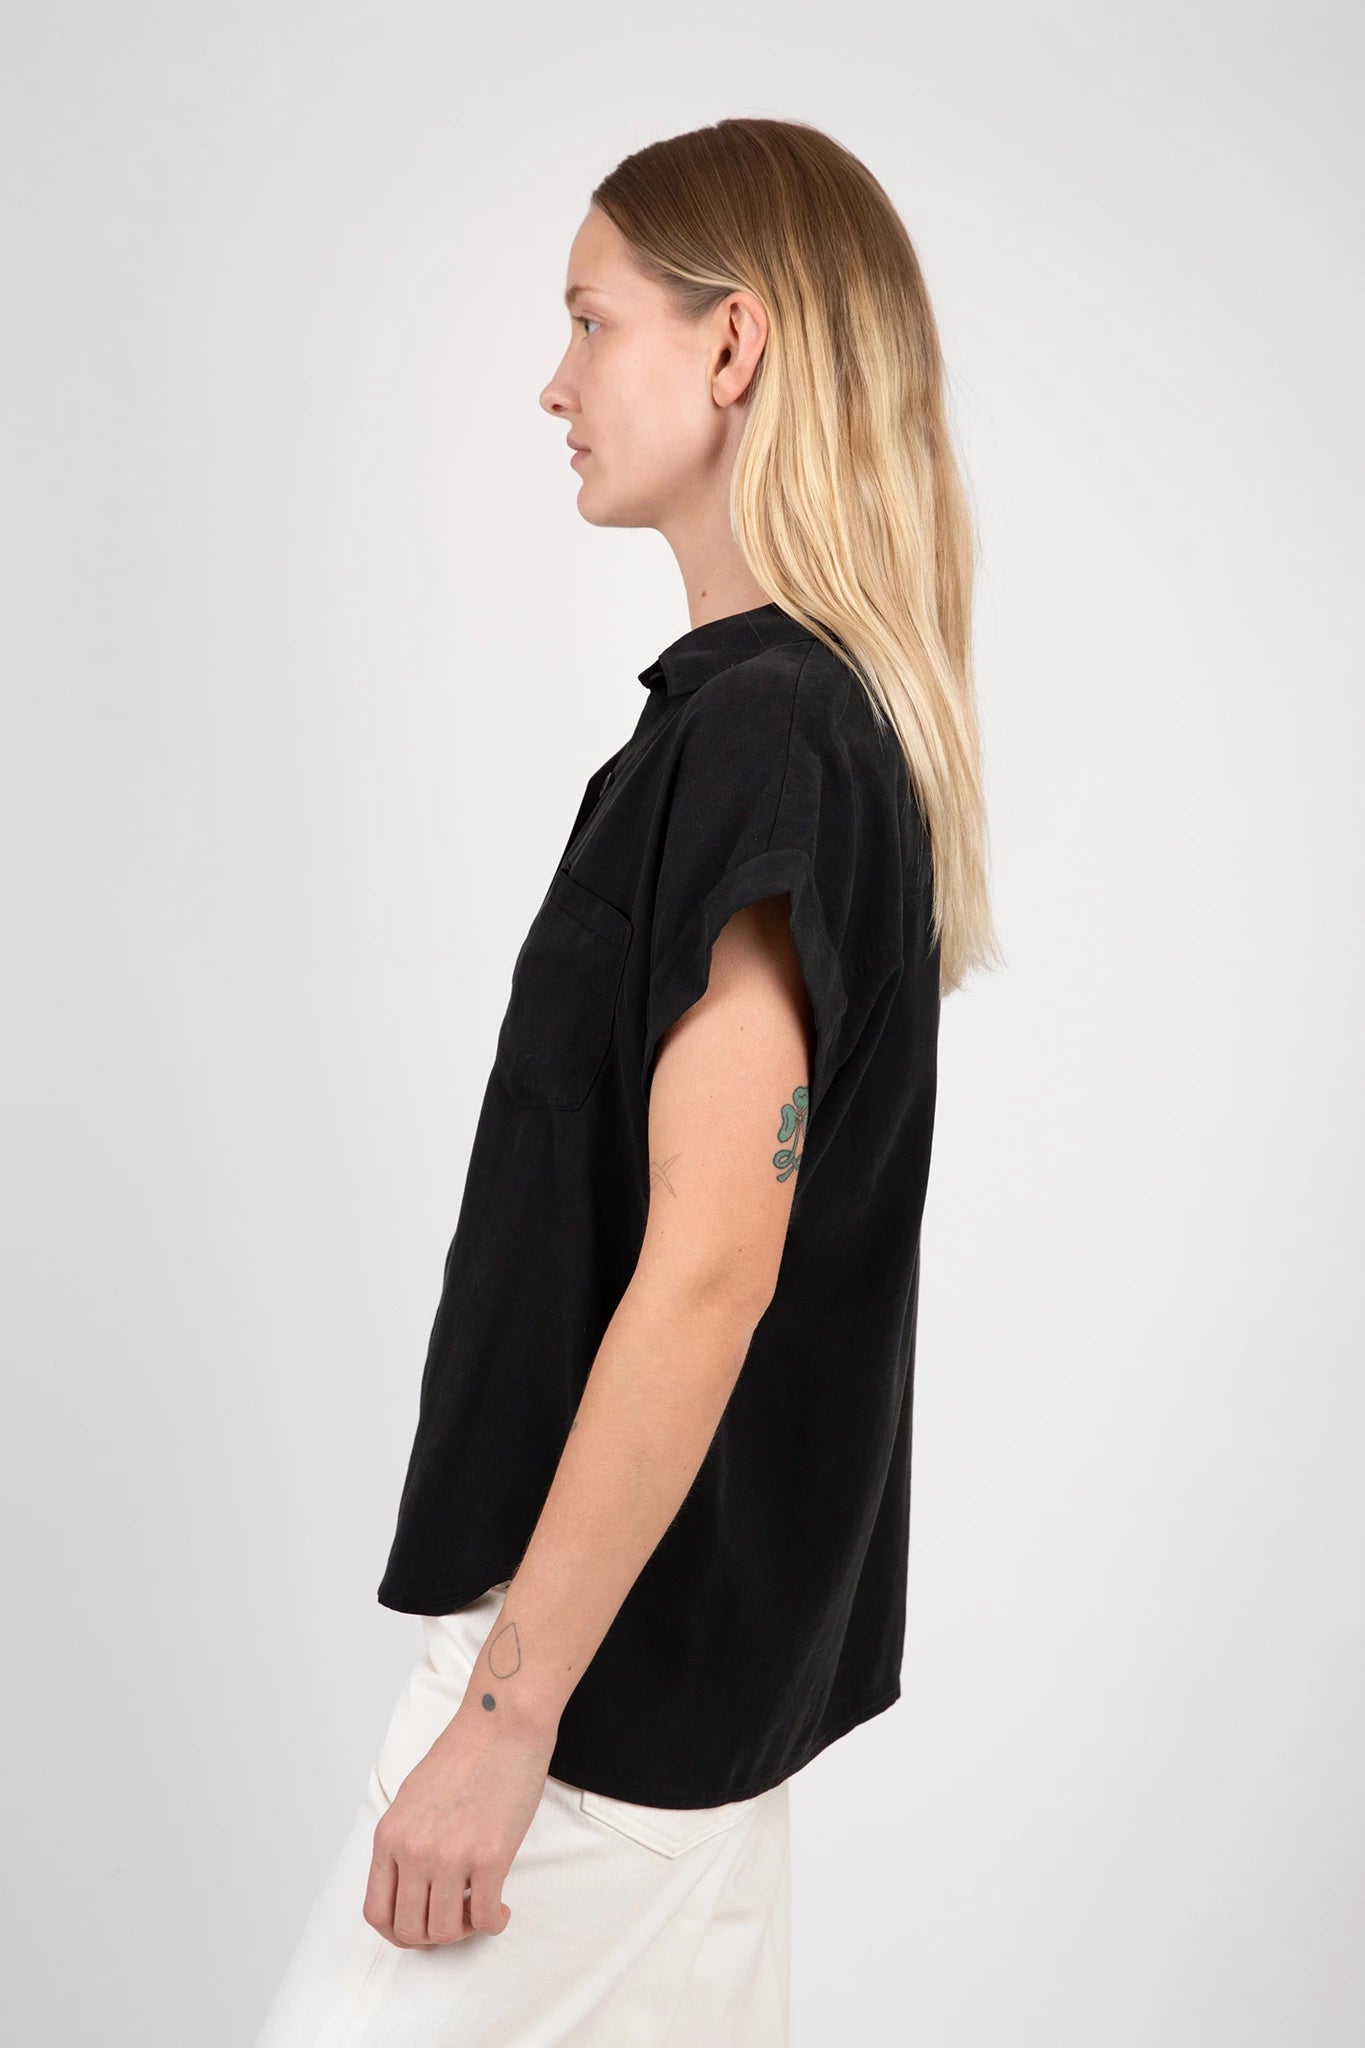 Two Pocket Short Sleeve Shirt Tops Bella Dahl   